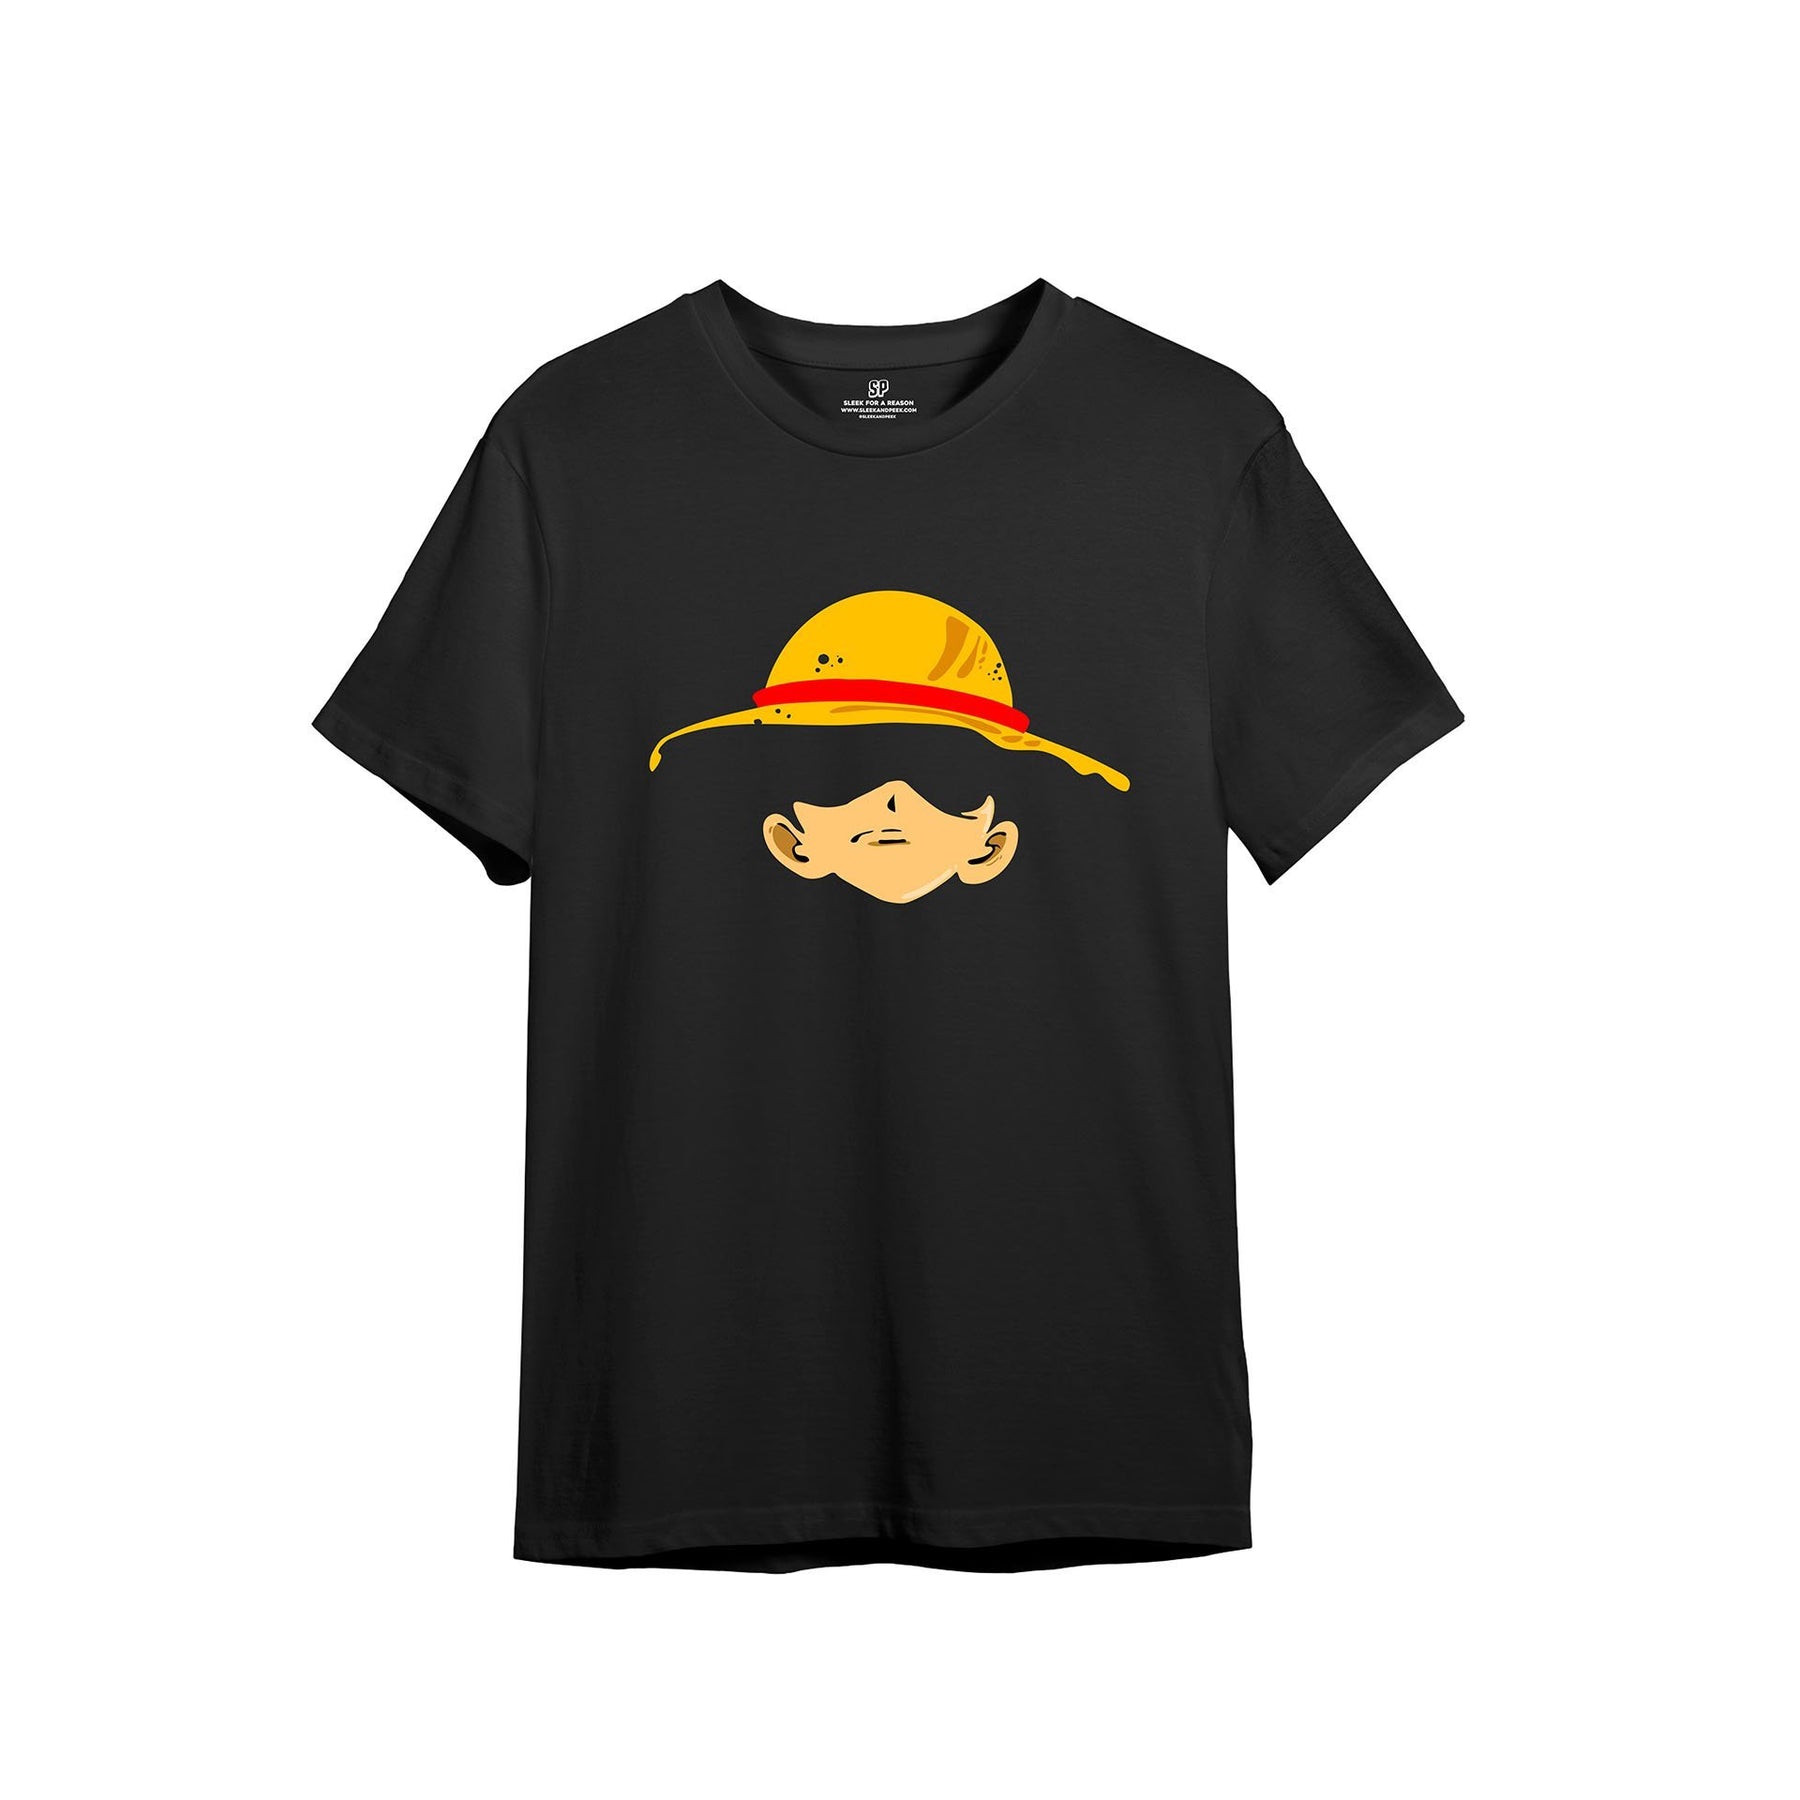 One Piece - Ambitious Luffy T-shirt - Sleek&Peek